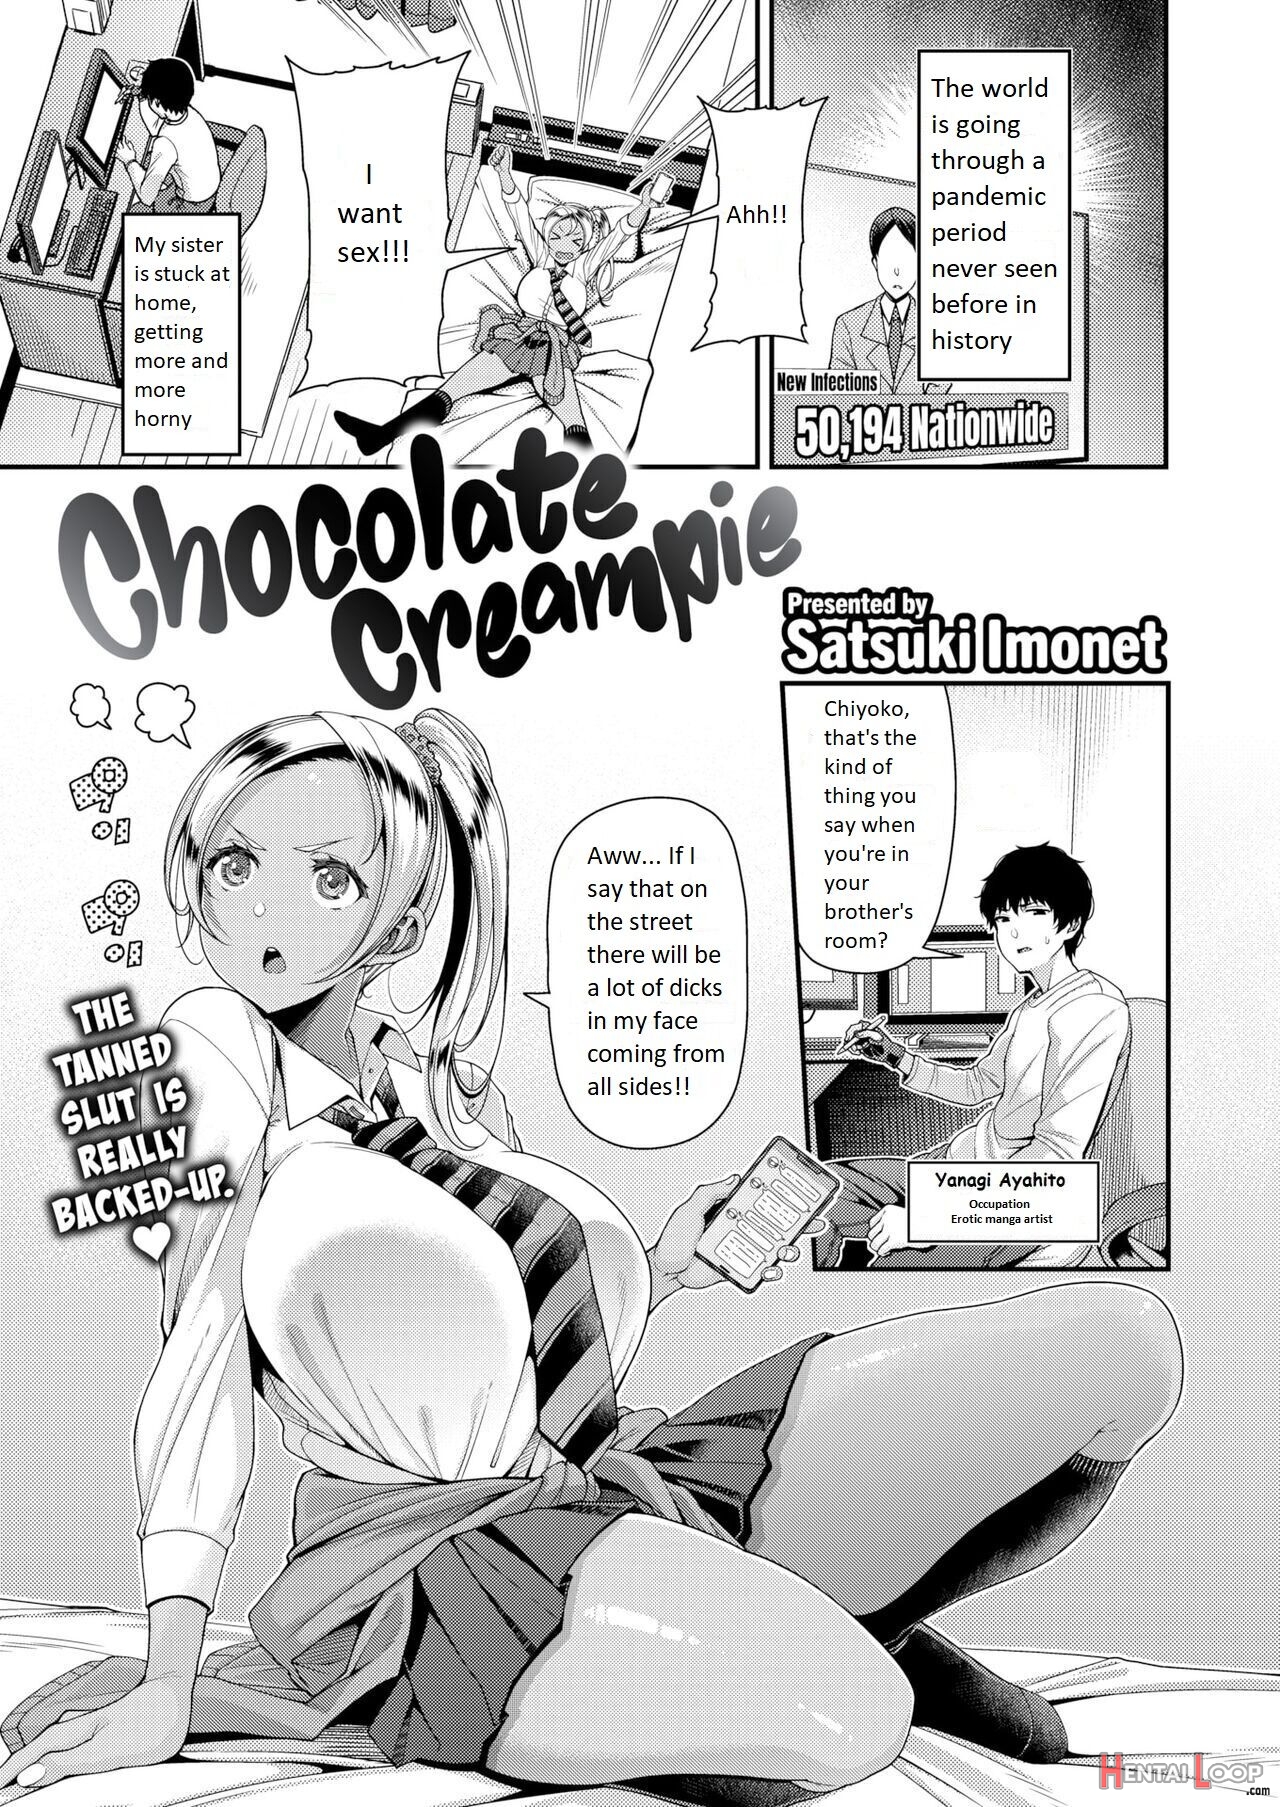 Chocolate Creampie page 1